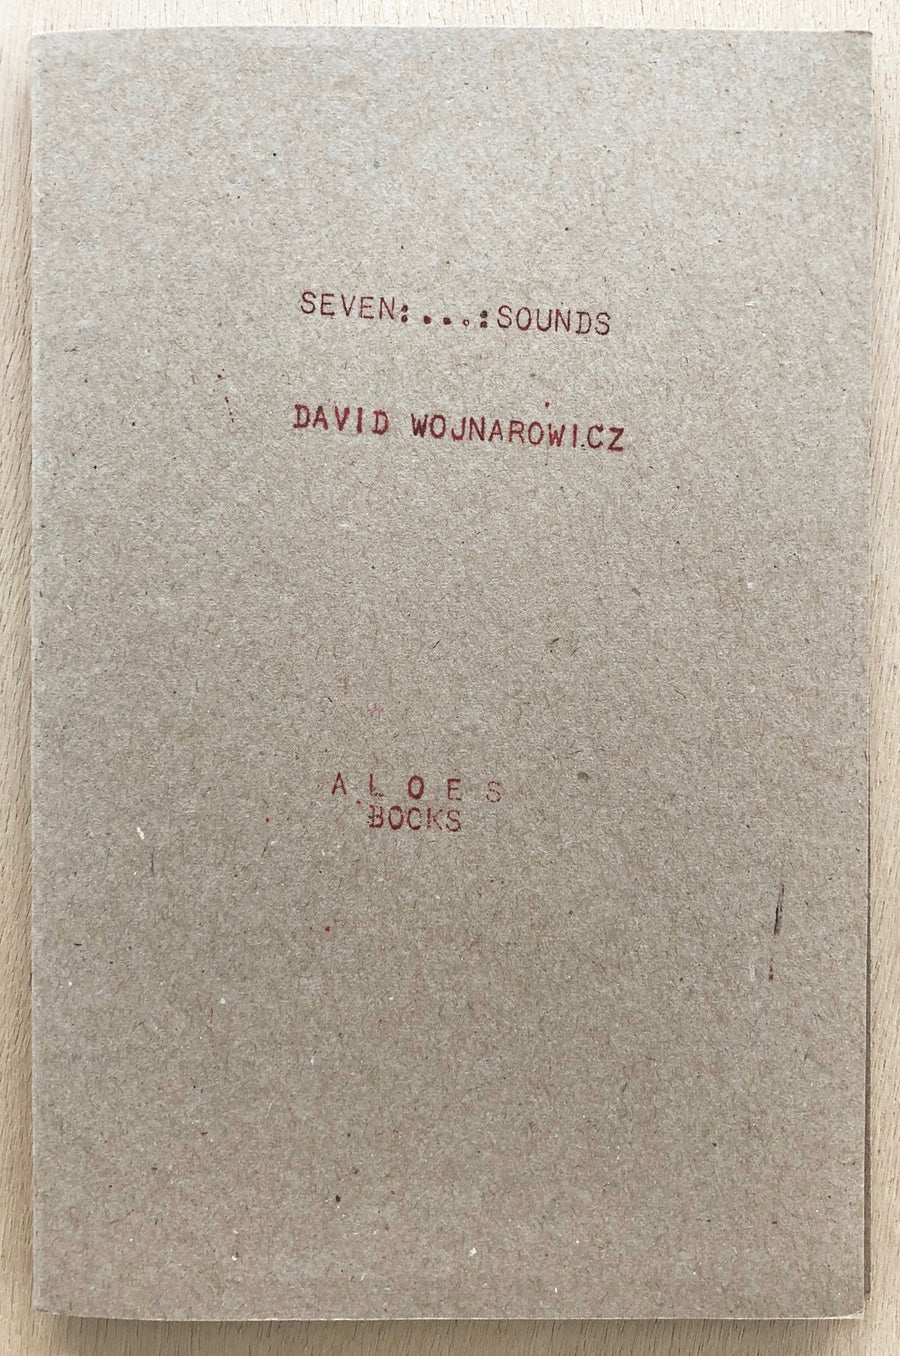 SEVEN SOUNDS  by David Wojnarowicz